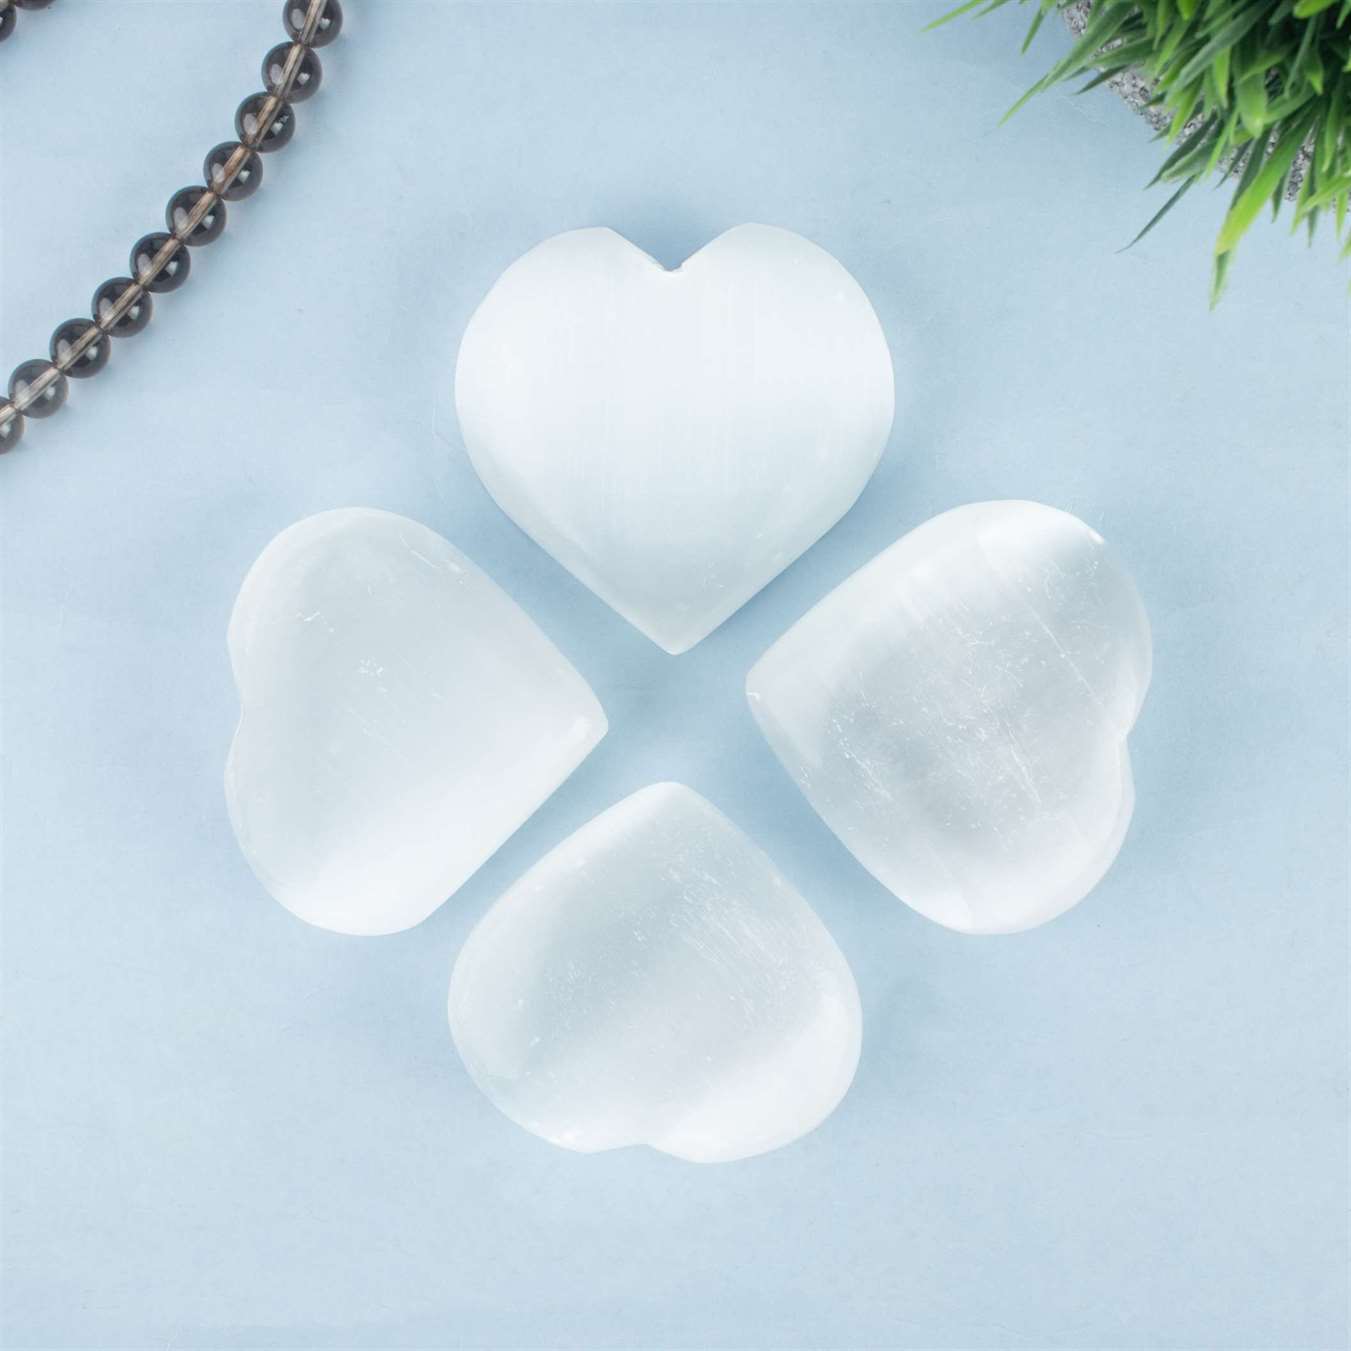 Salenite Crystal Heart Shape Stone - TheIndianHand